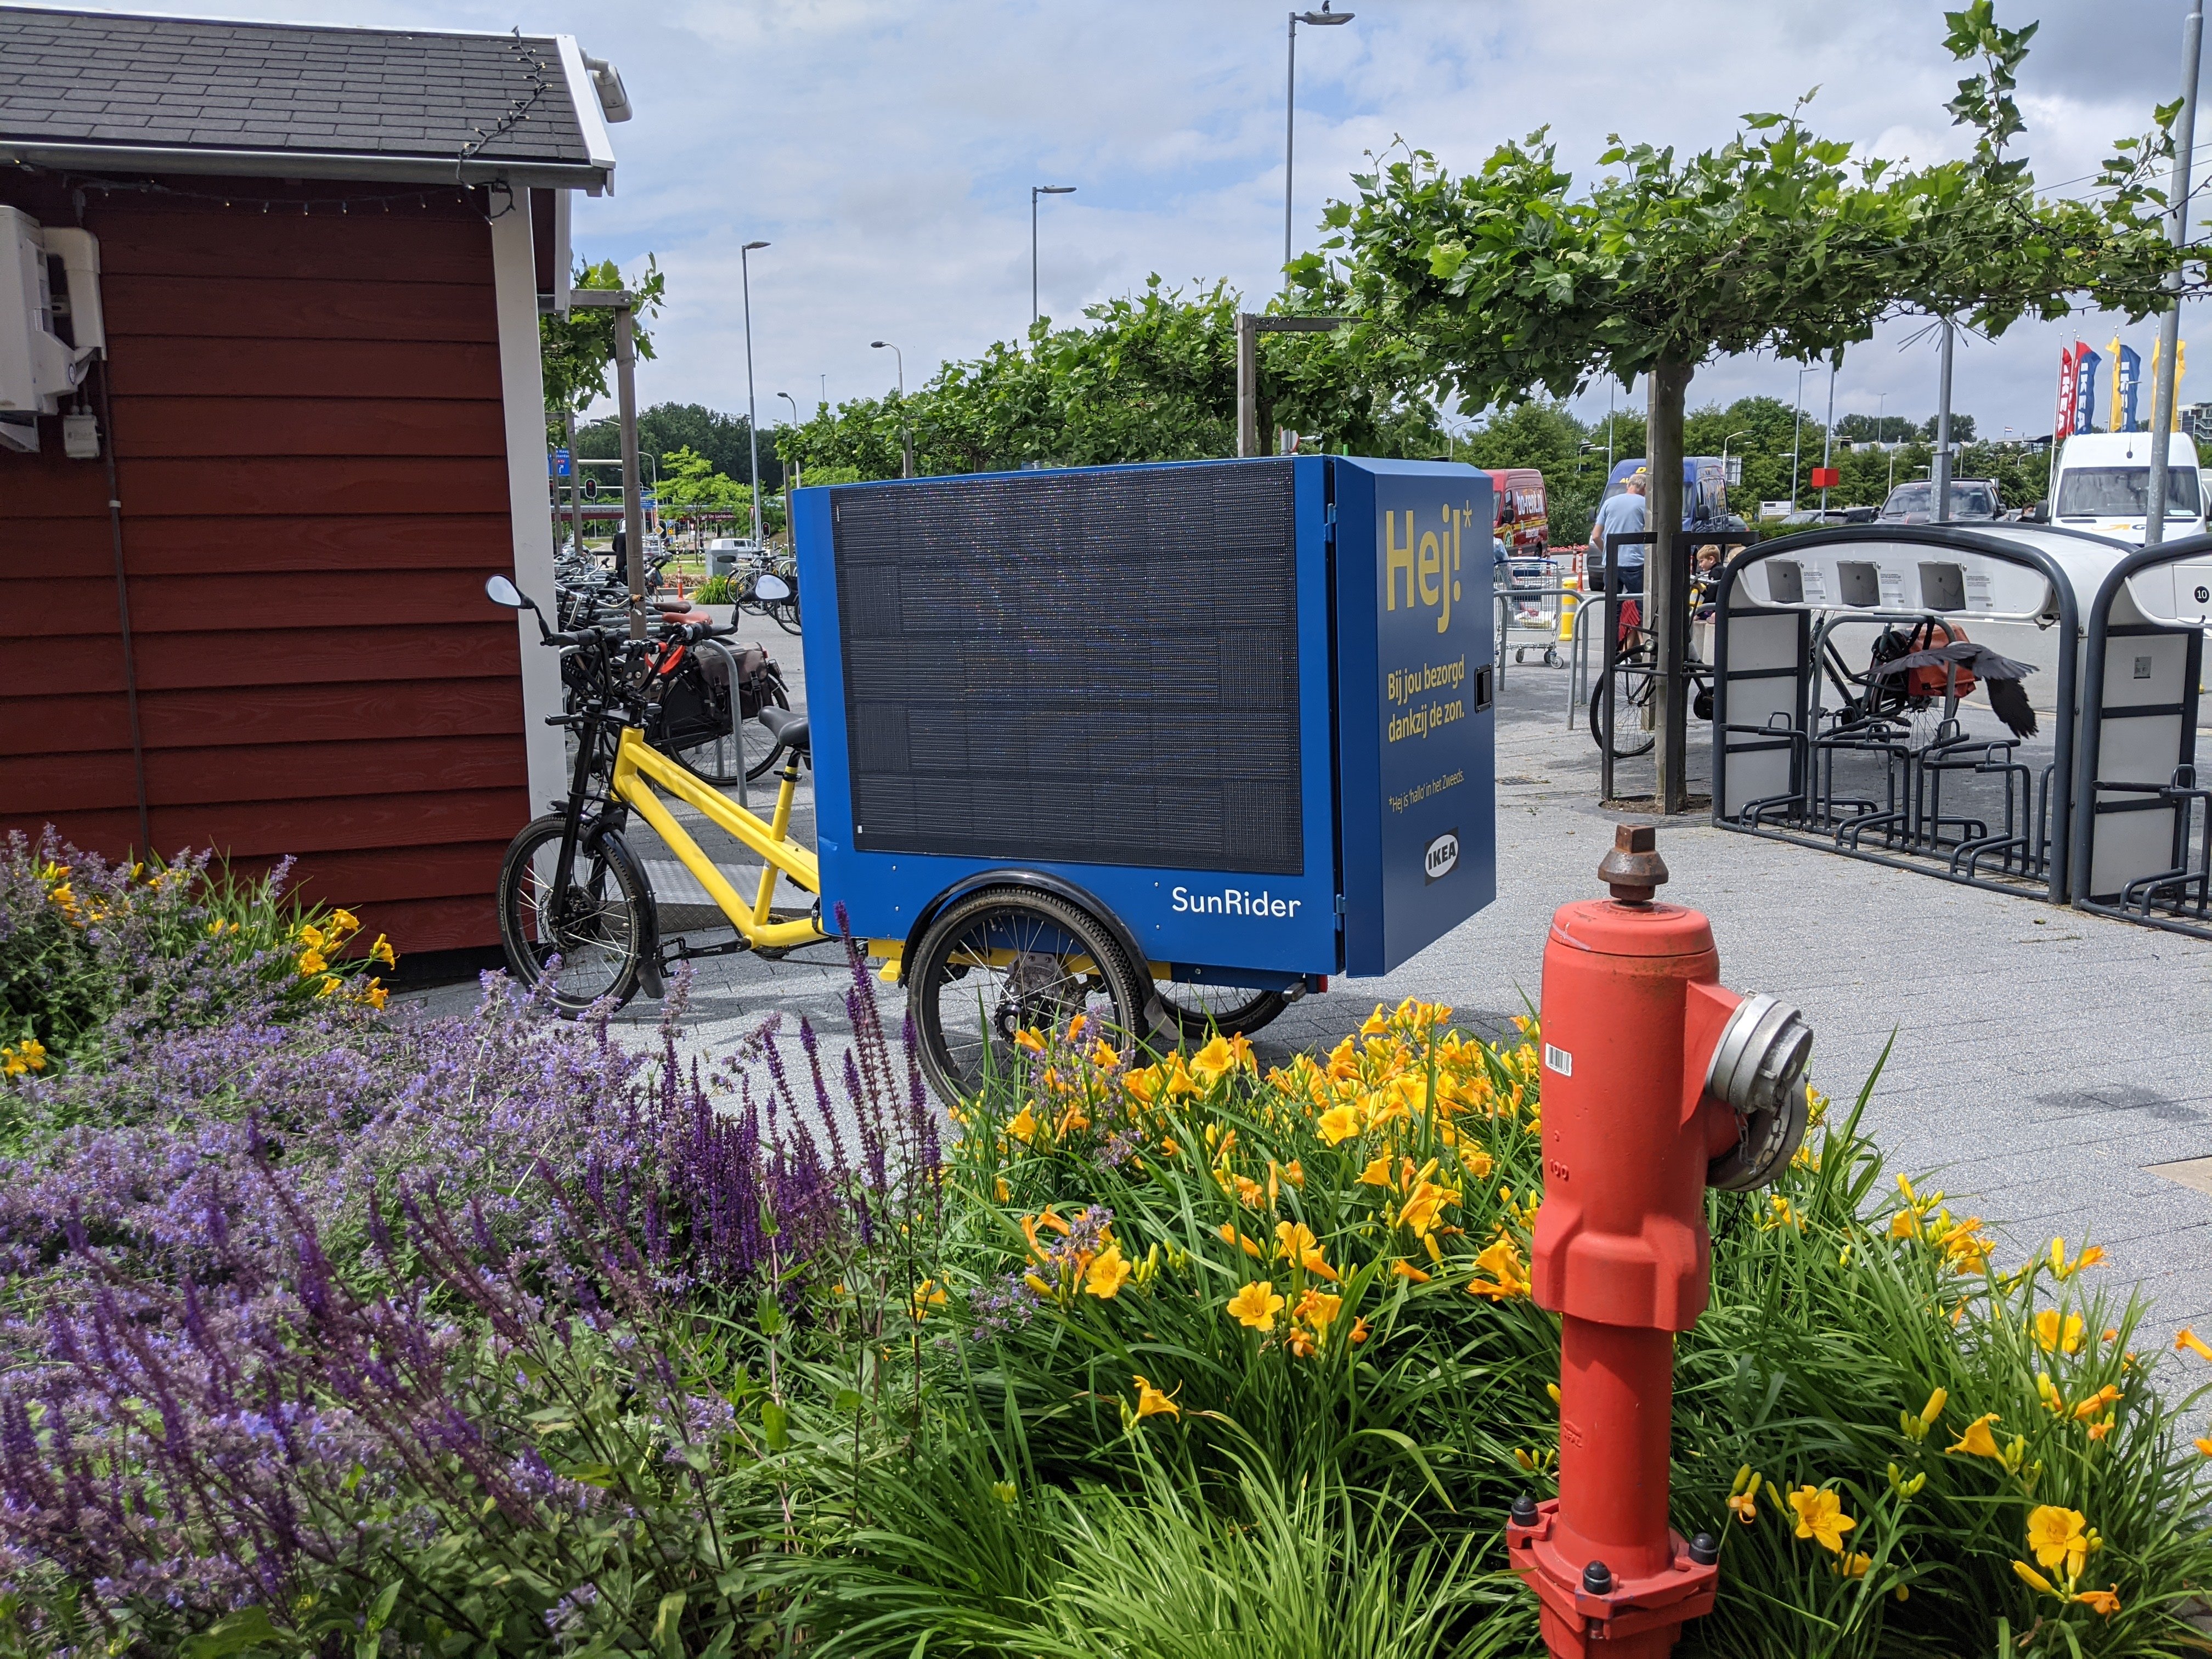 Overeenstemming Hoop van analyse Lior Steinberg on Twitter: "Found in Ikea in #Delft: a solar-powered cargo  bike called SunRider. https://t.co/dWB4f7rmie" / Twitter